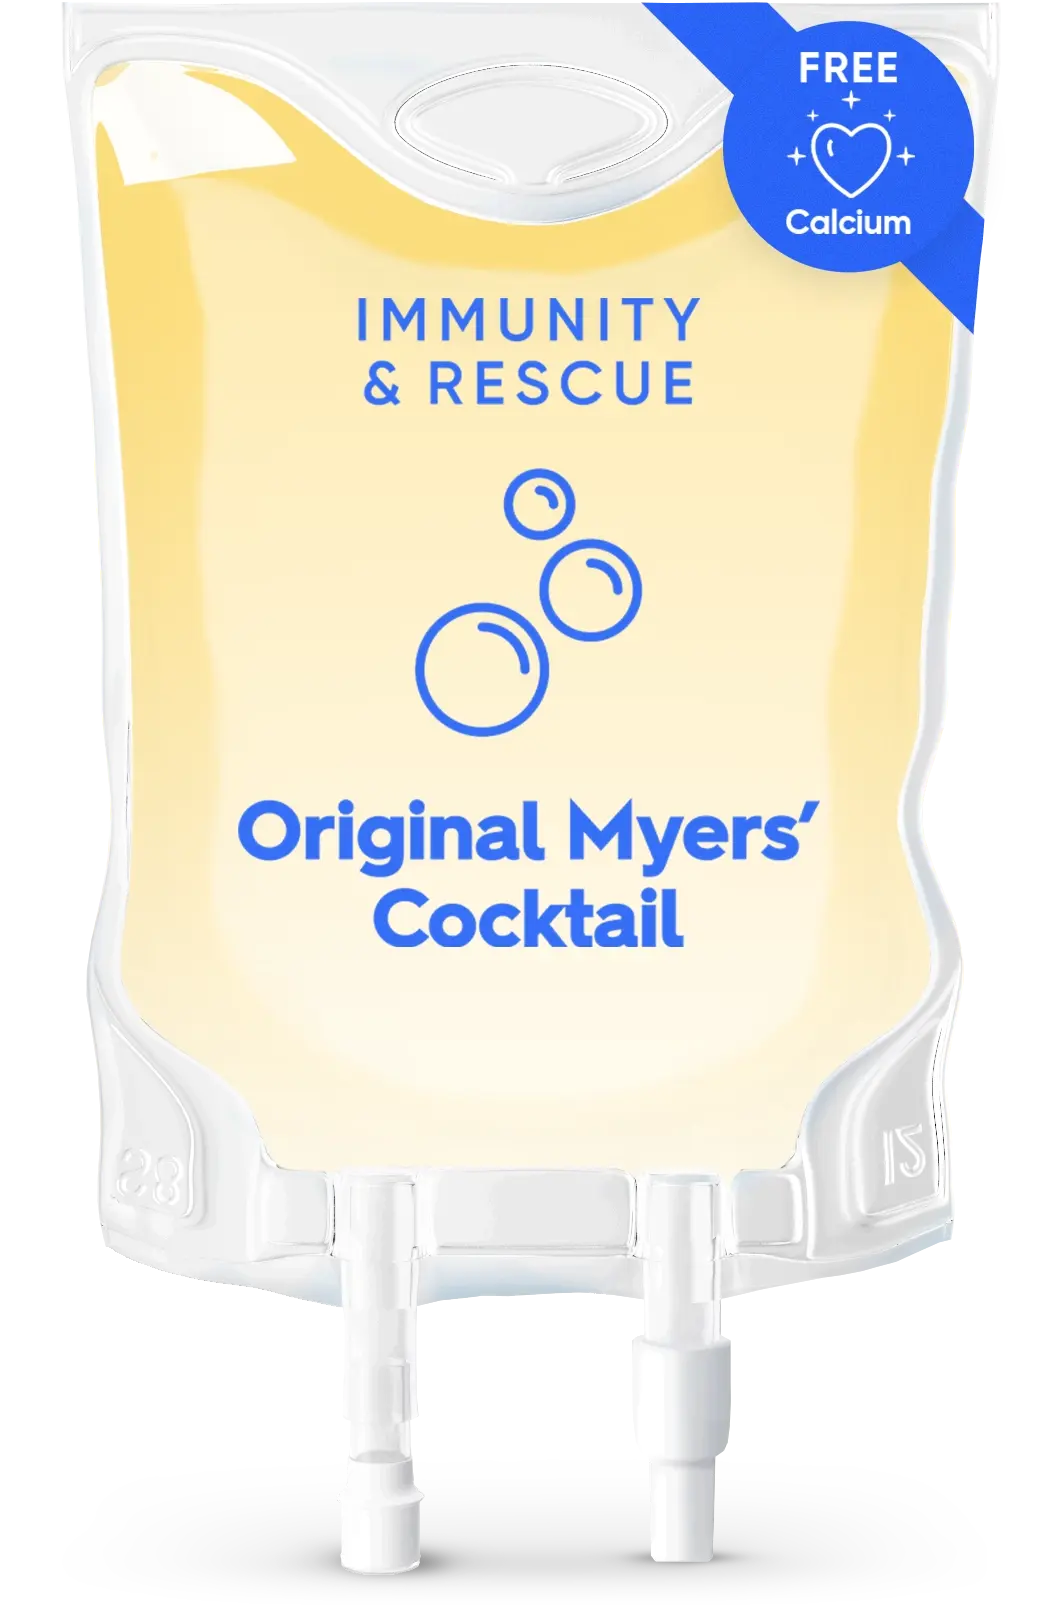 Original Myers' Cocktail